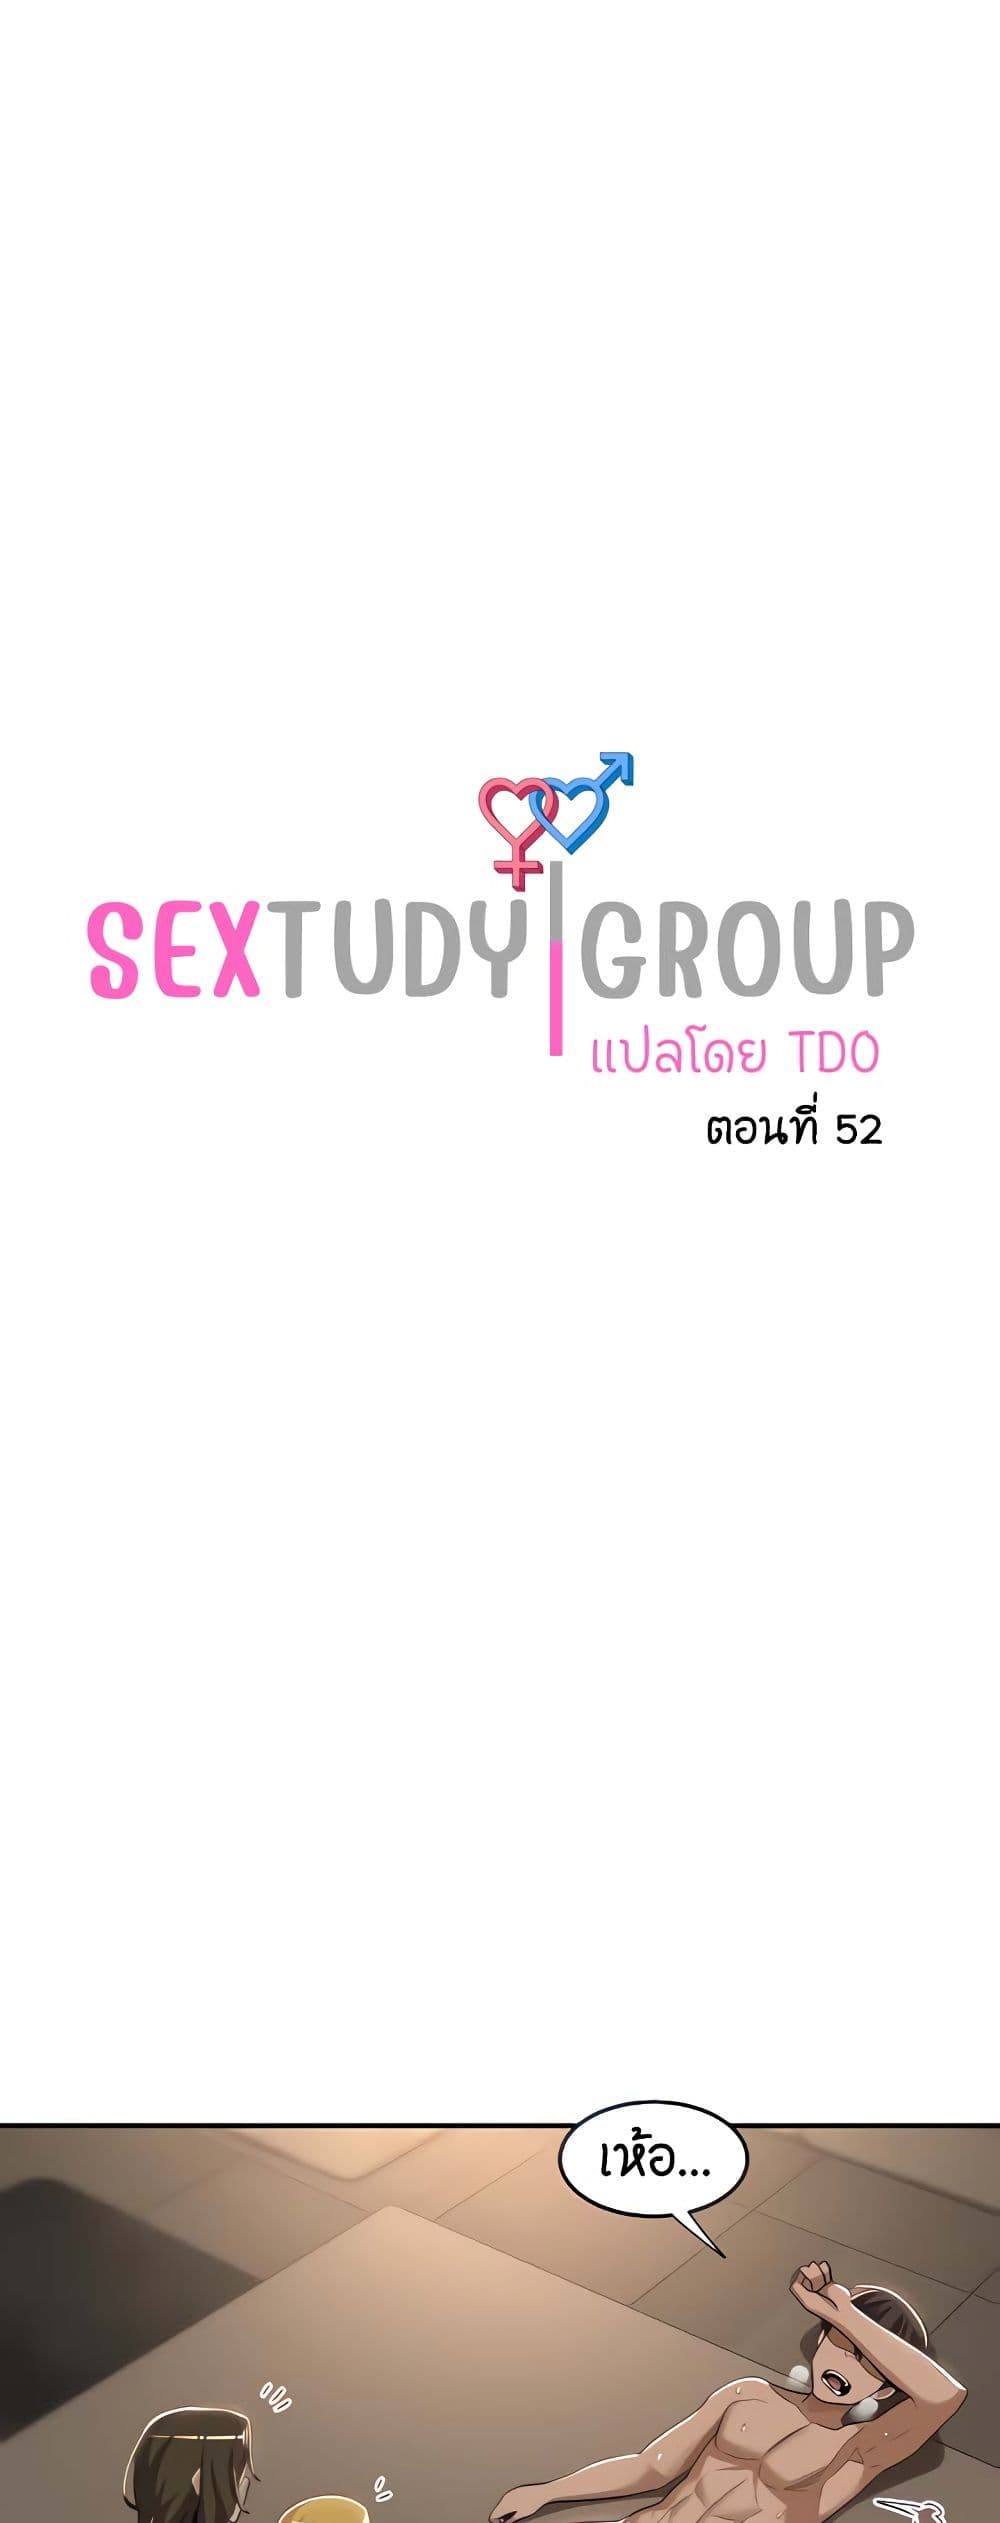 Sextudy Group 52-52